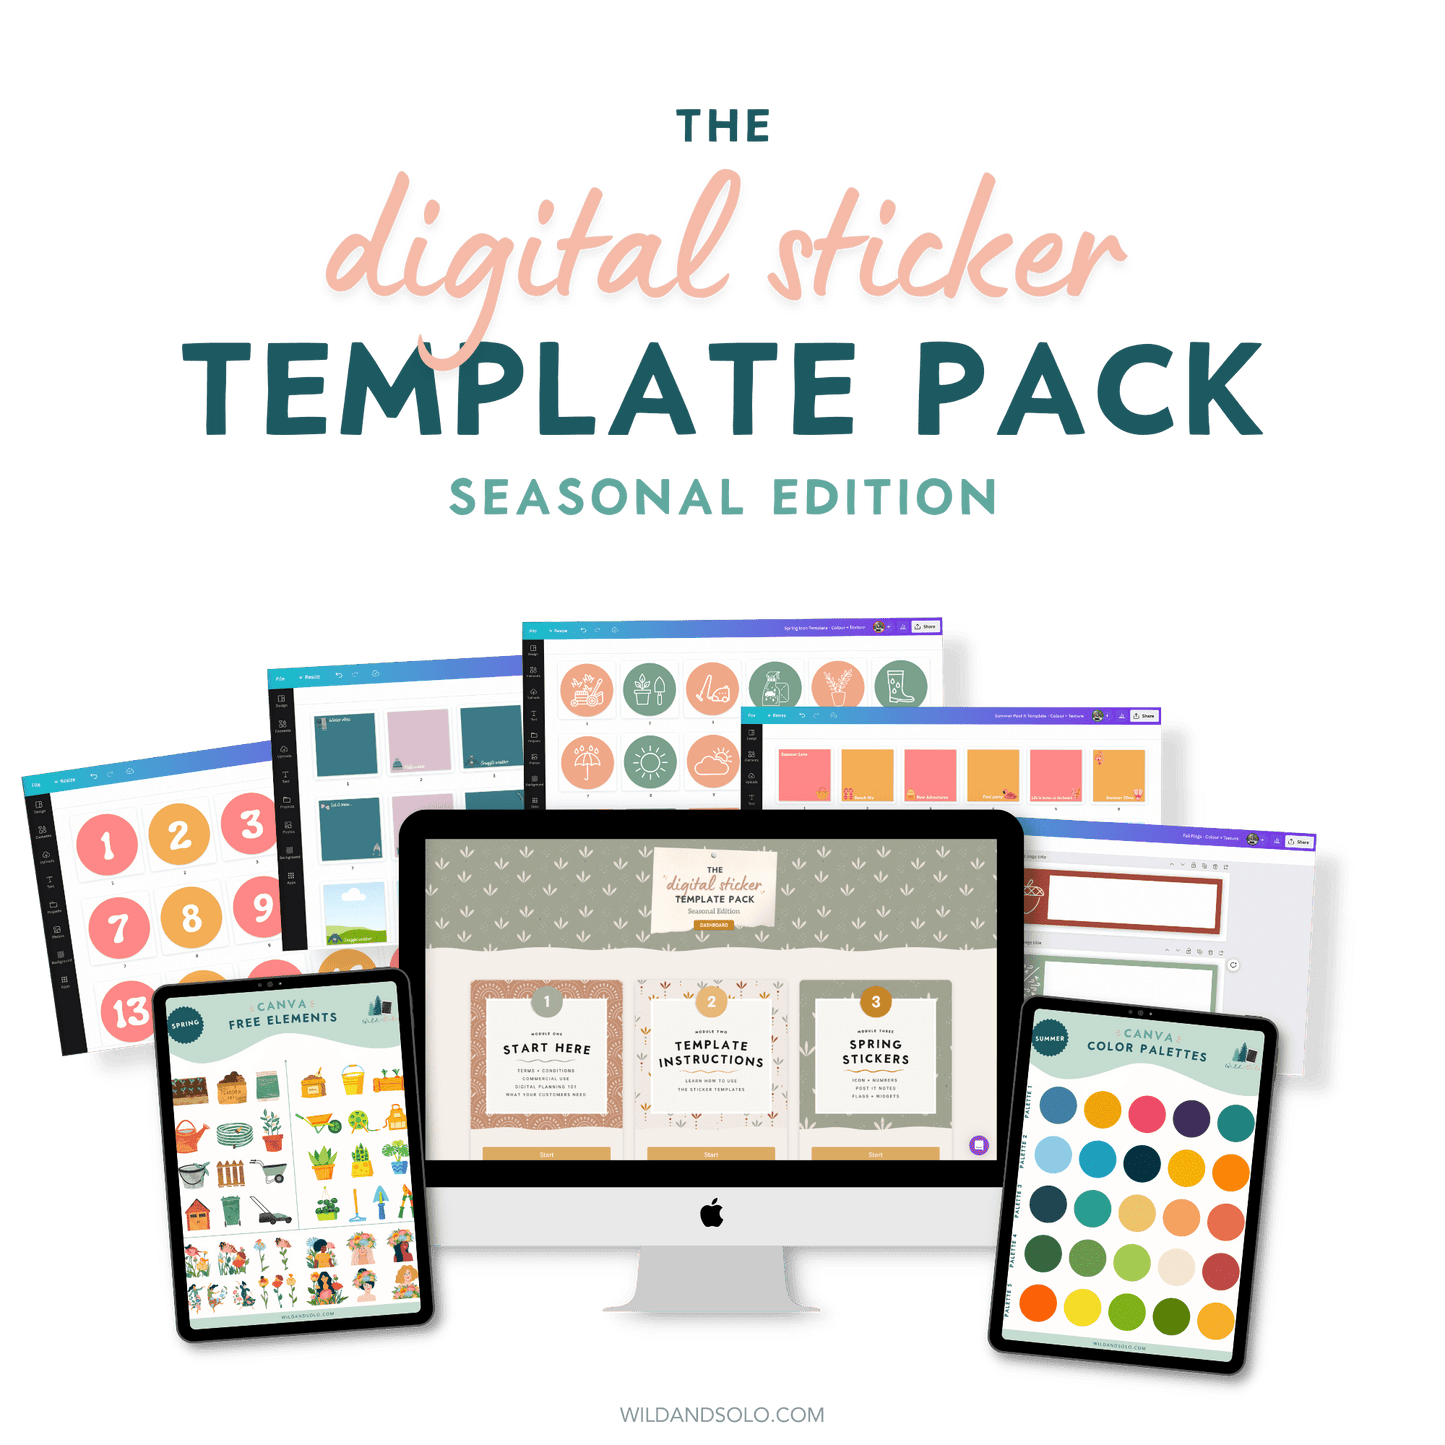 Digital Sticker Template Pack - Seasonal Edition shown on an iPad